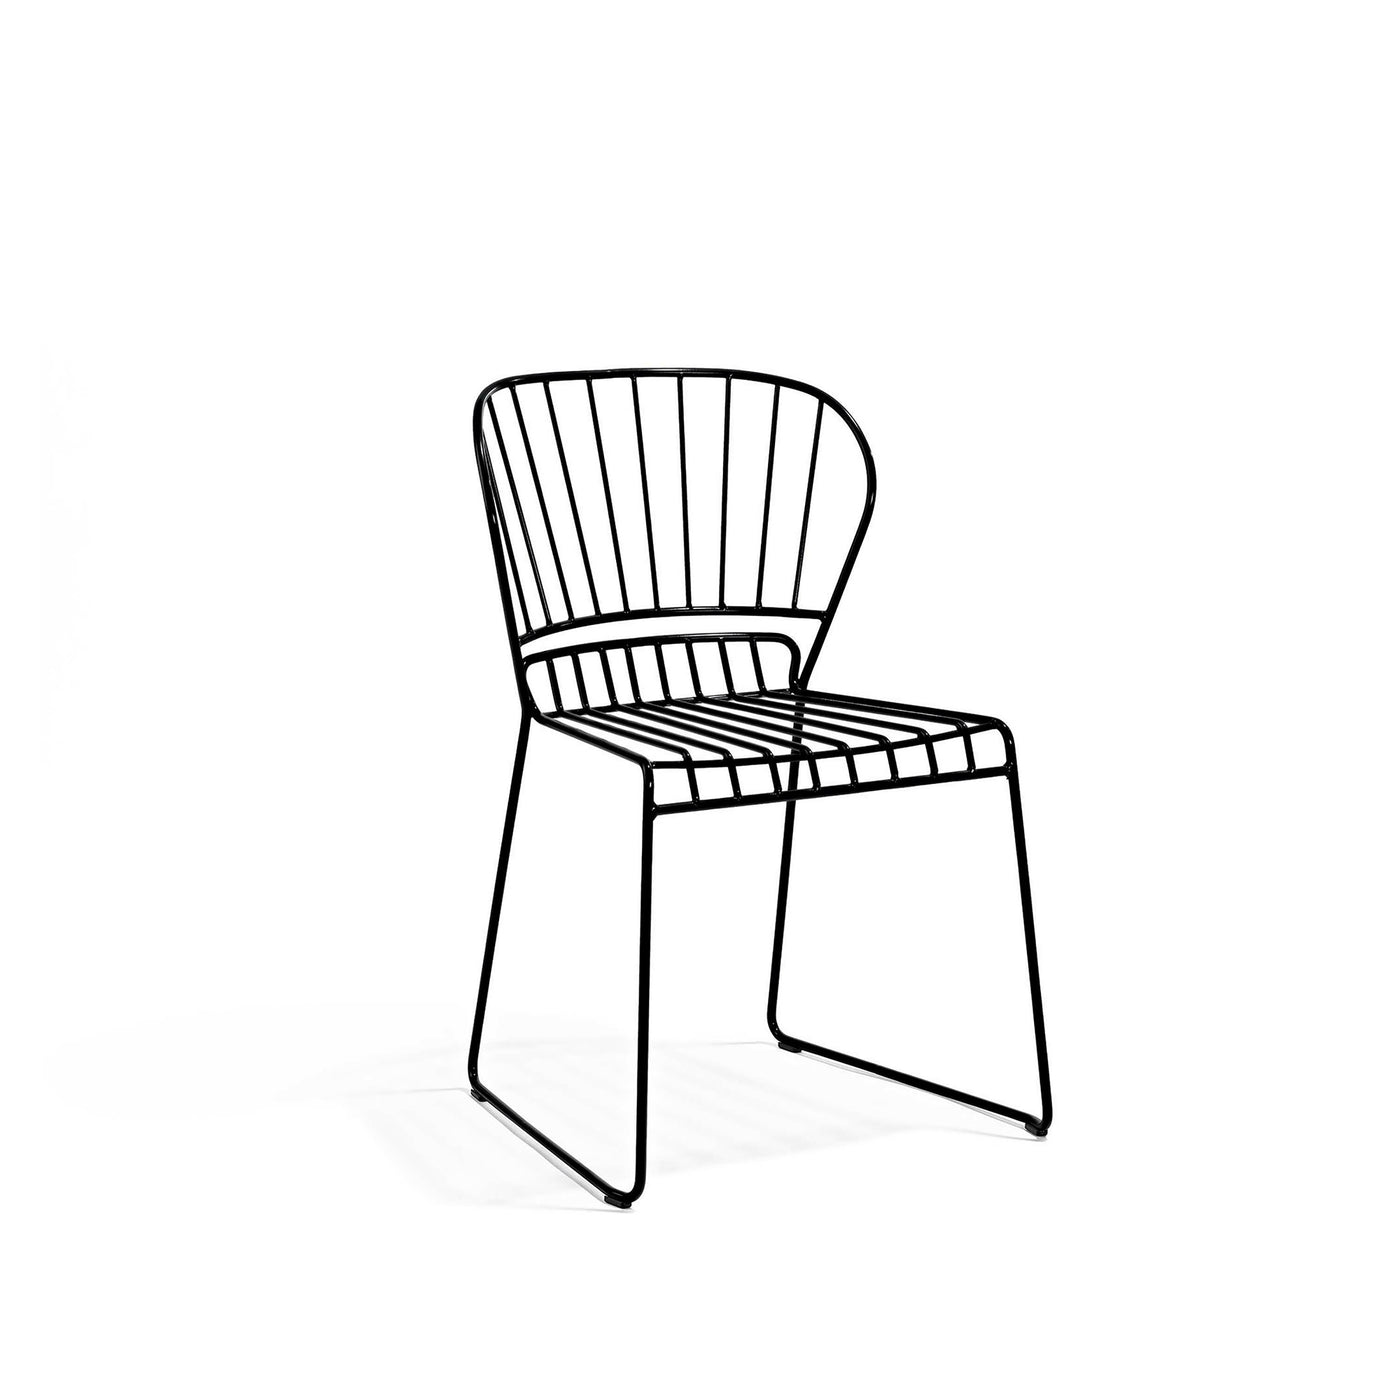 RESO chair